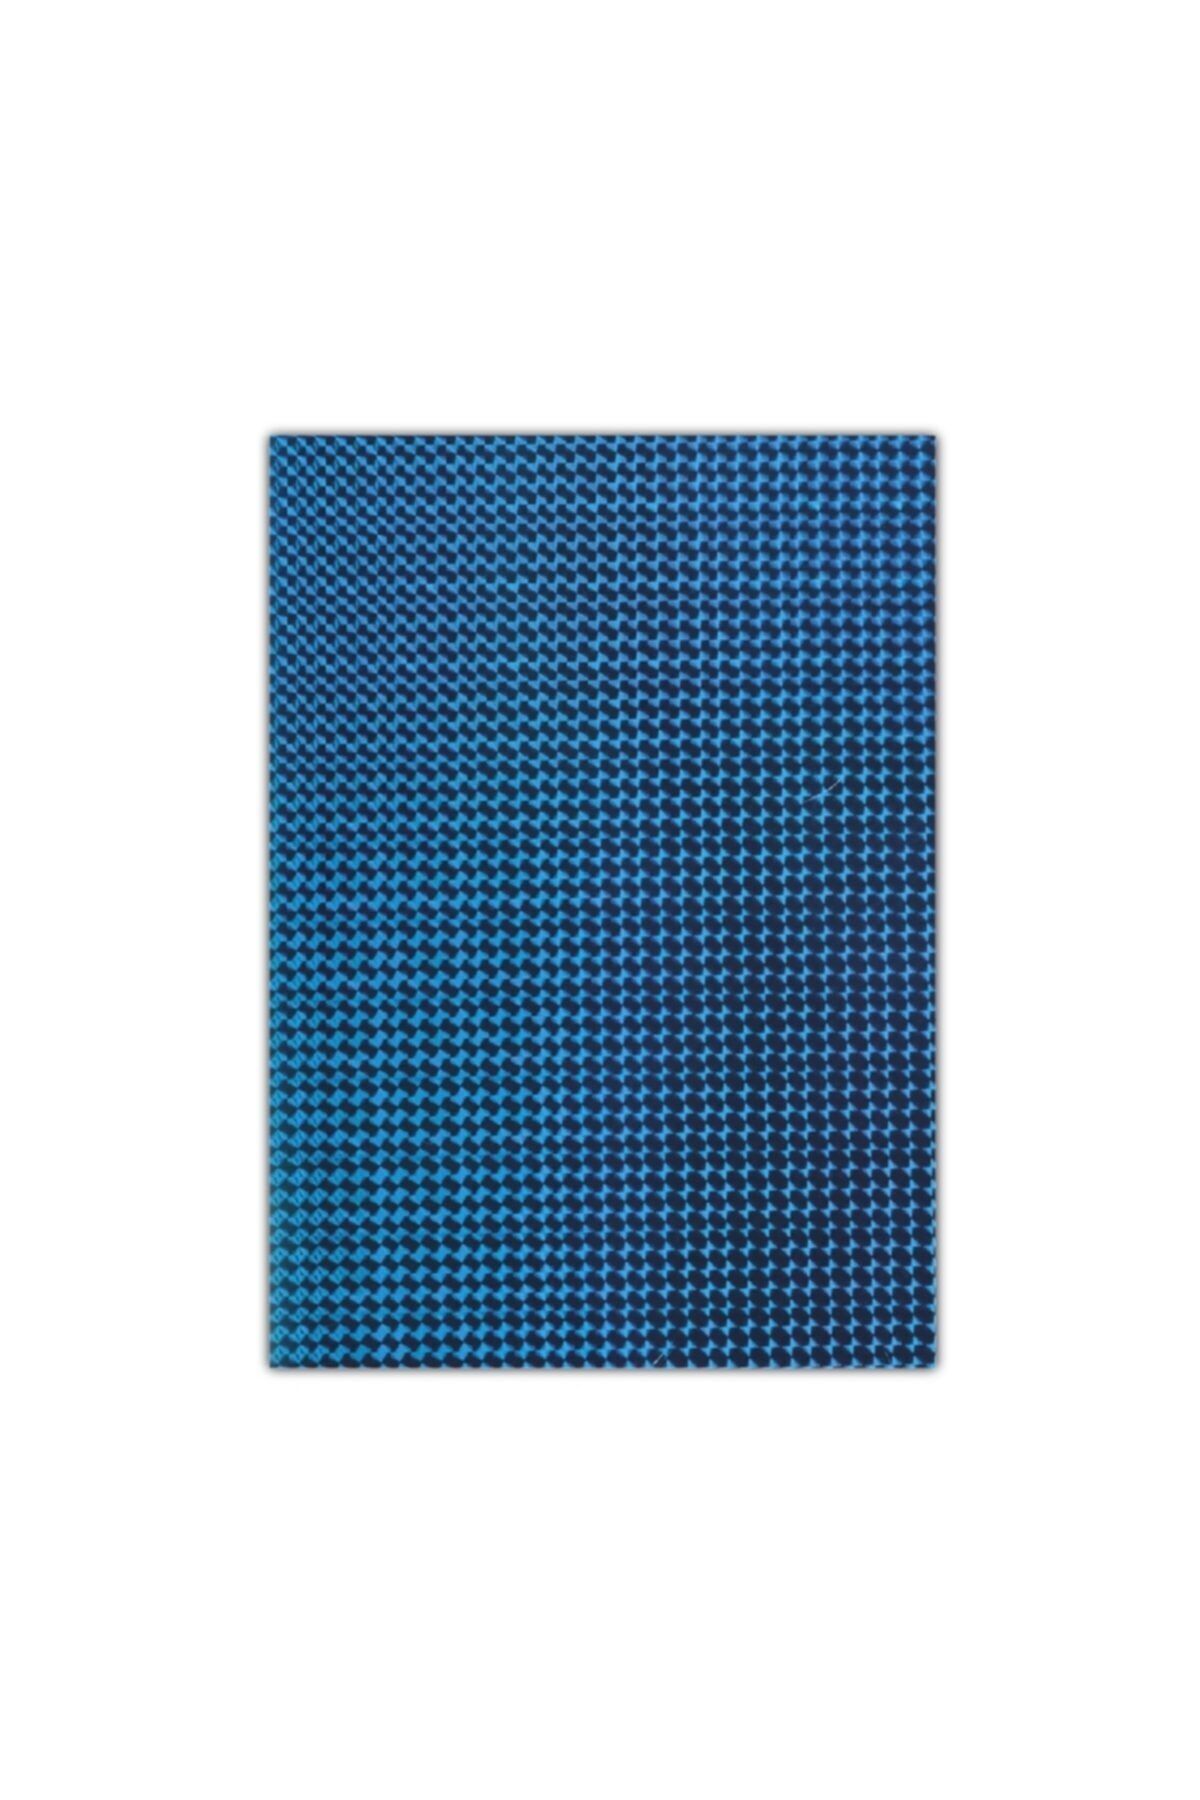 Genel Markalar Metalik Renkli Karton 50x70cm Mavi 10'lu Poşet